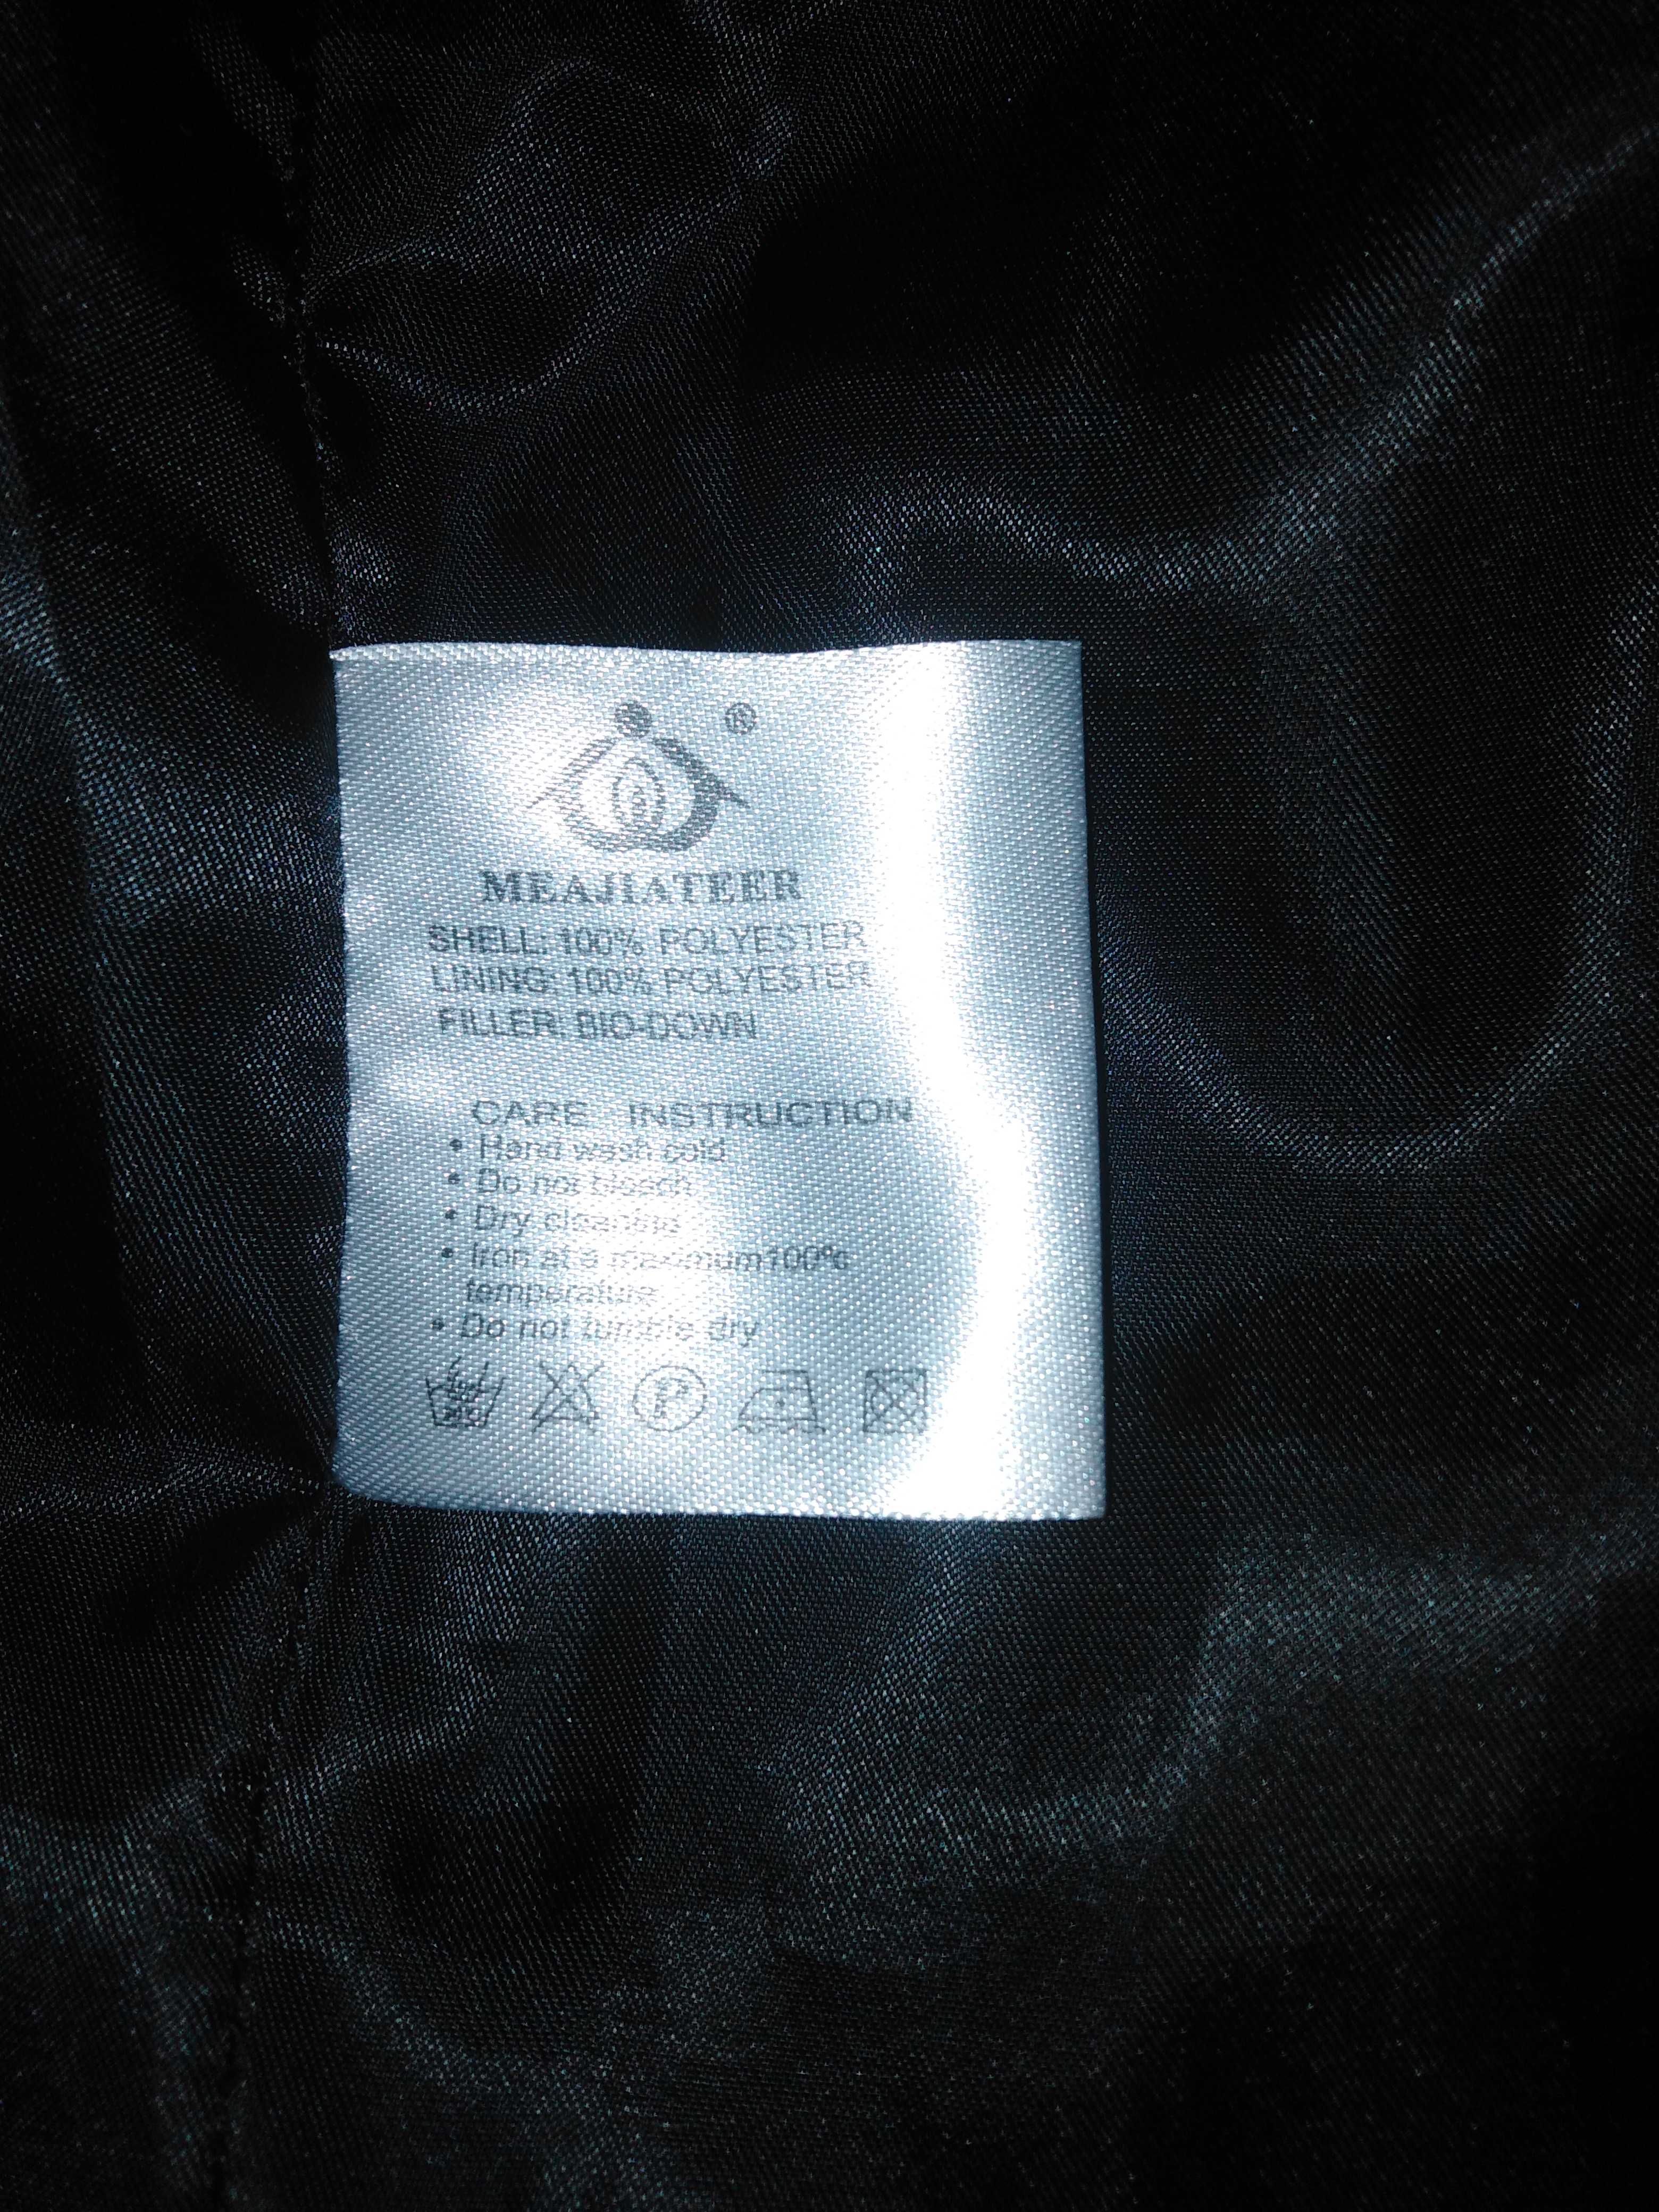 Продам зимнюю женскую куртку MEAJIATEER размер 46